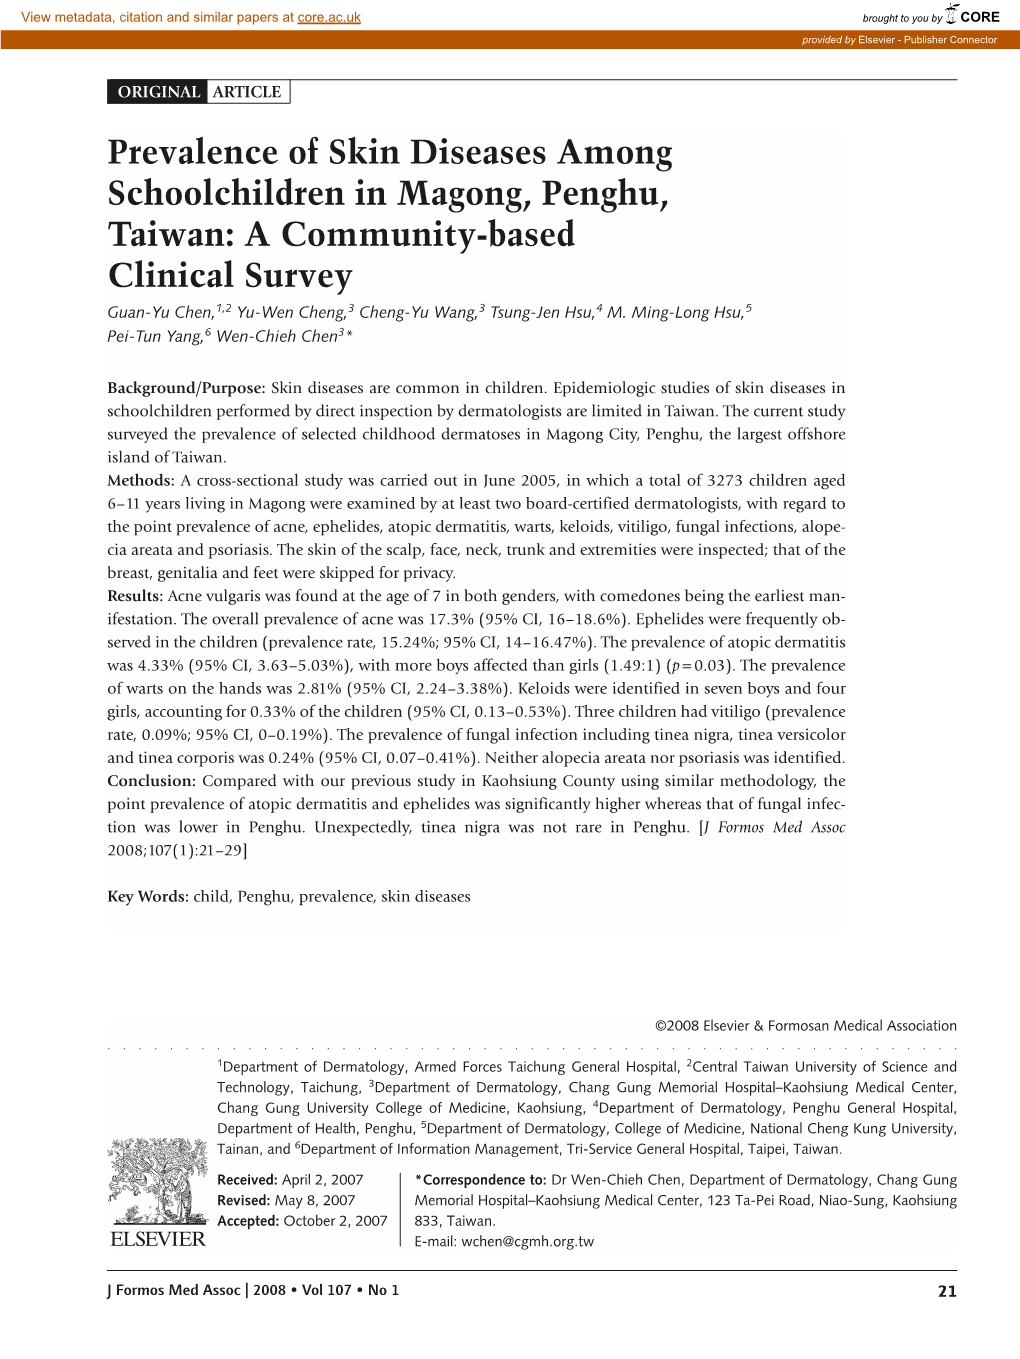 Prevalence of Skin Diseases Among Schoolchildren in Magong, Penghu, Taiwan